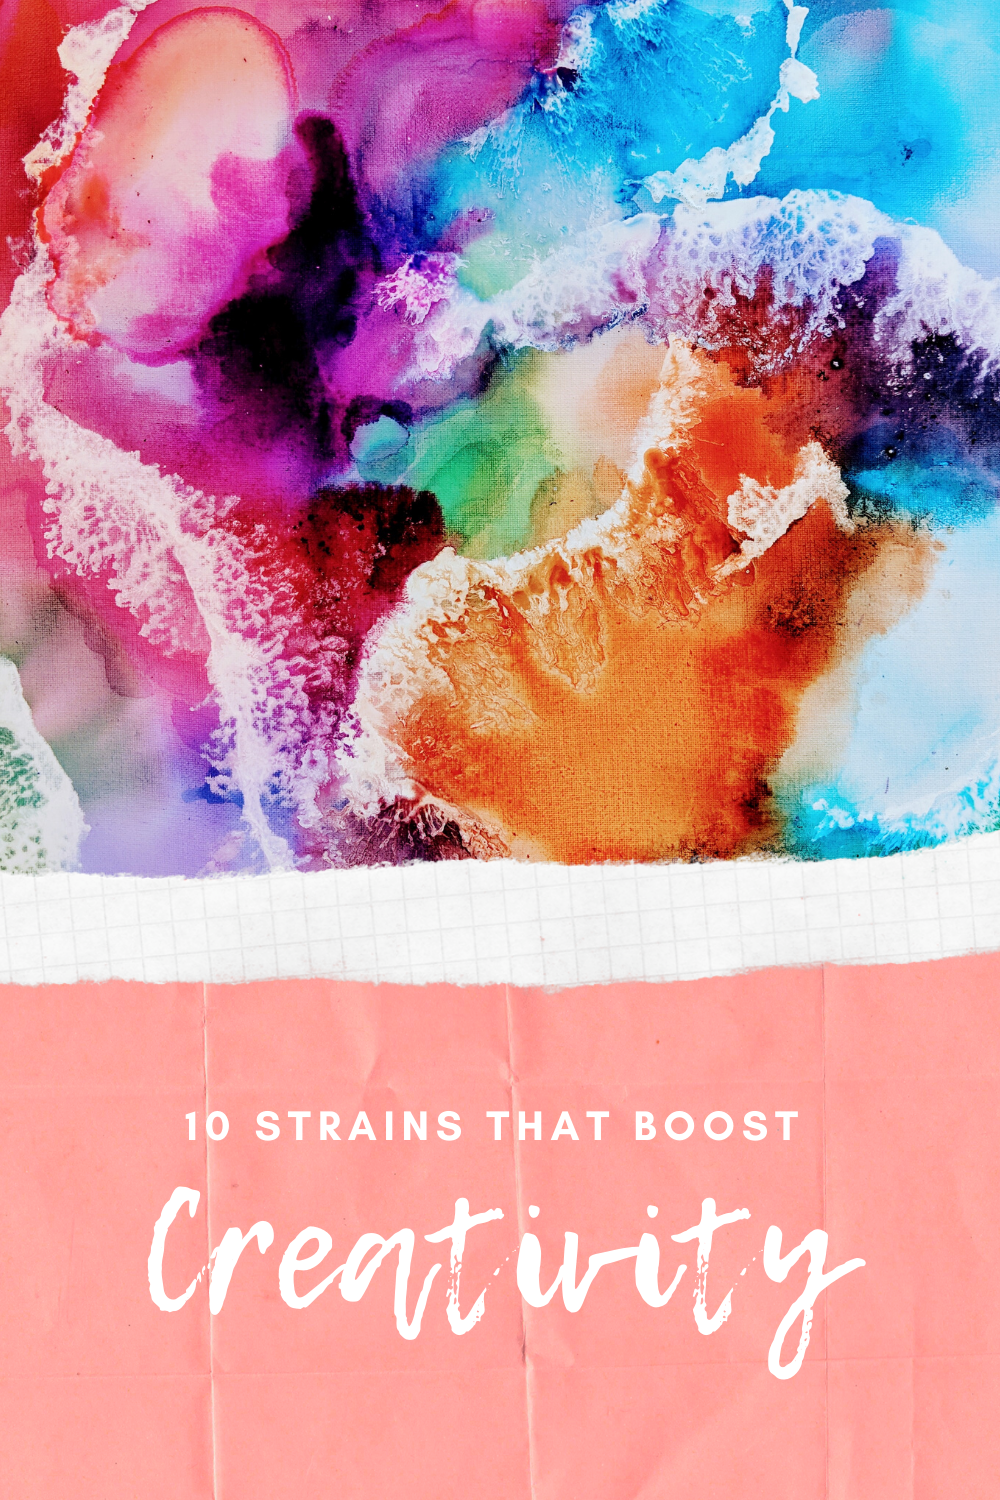 10 Strains That Boost Creativity